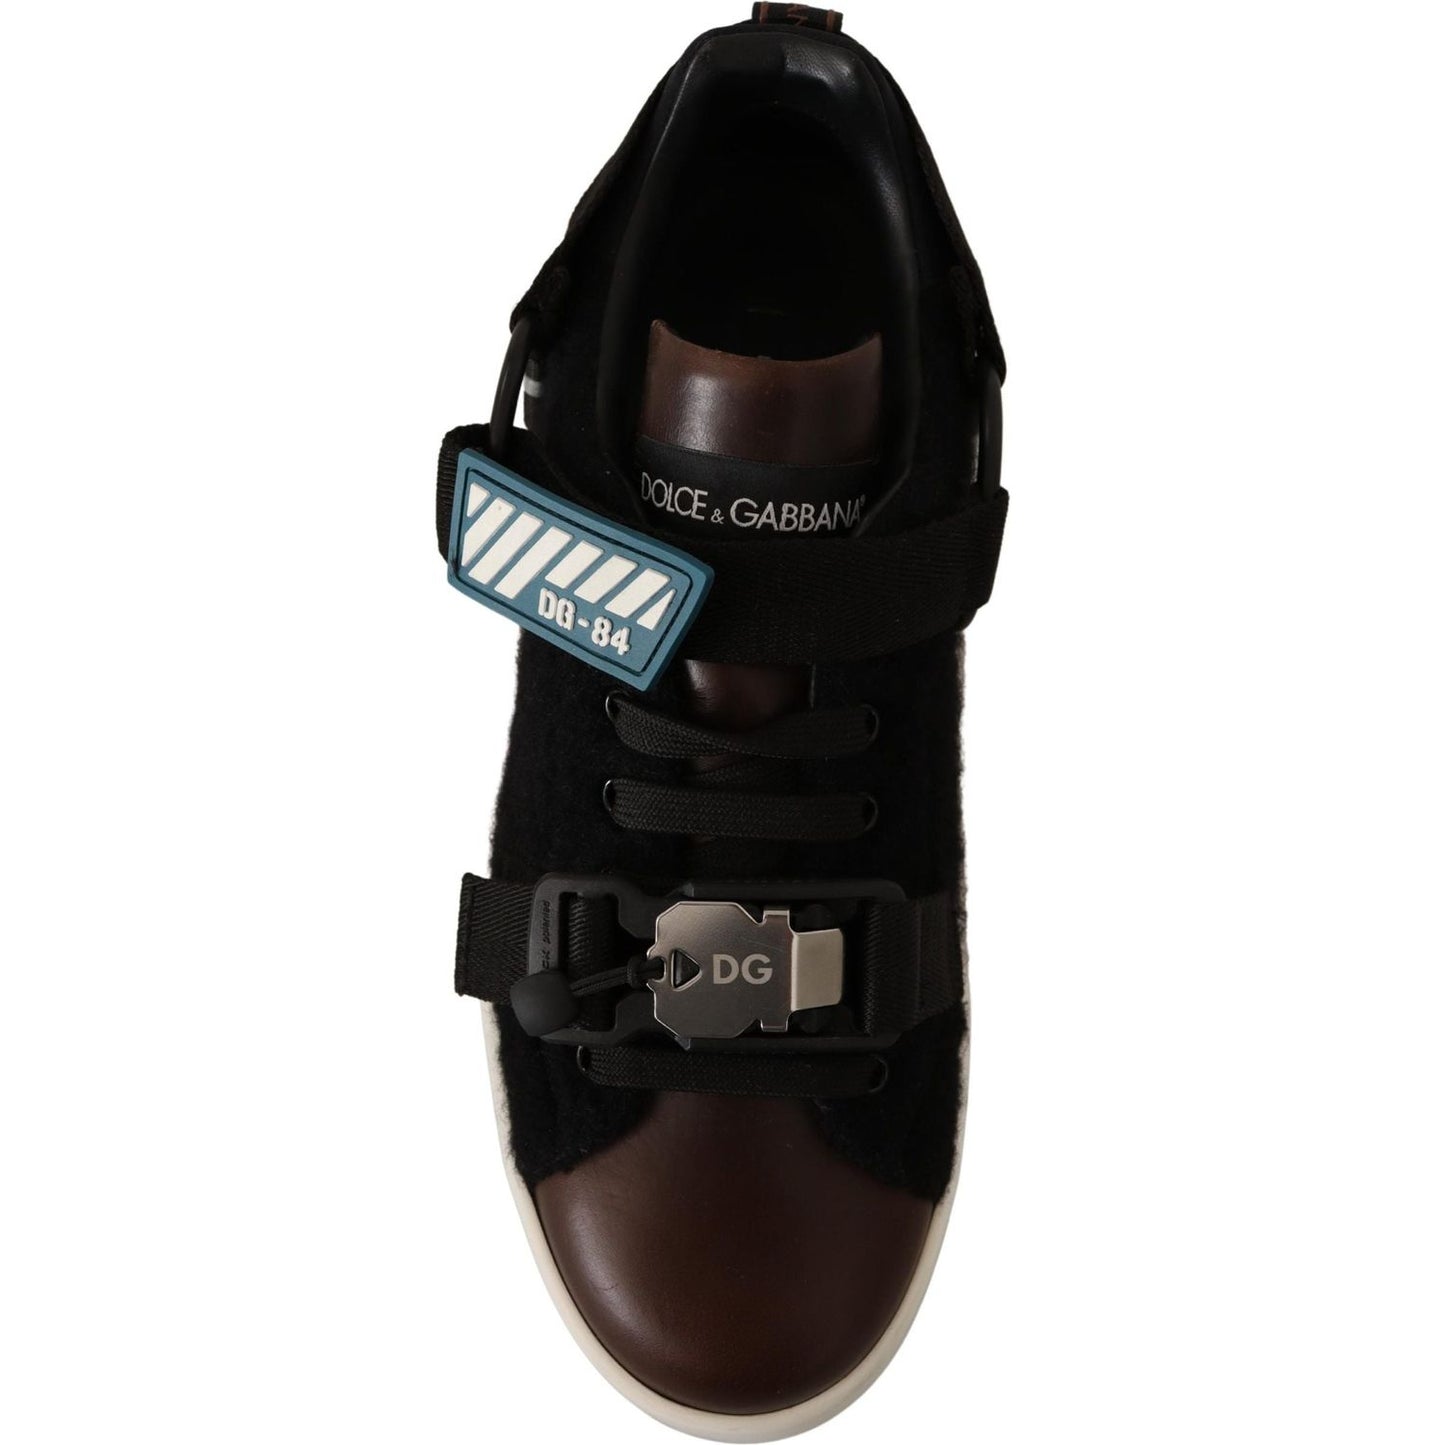 Dolce & Gabbana Shearling-Trimmed Leather Sneakers brown-leather-black-shearling-sneakers IMG_9289-scaled-ca2b2a4e-151.jpg